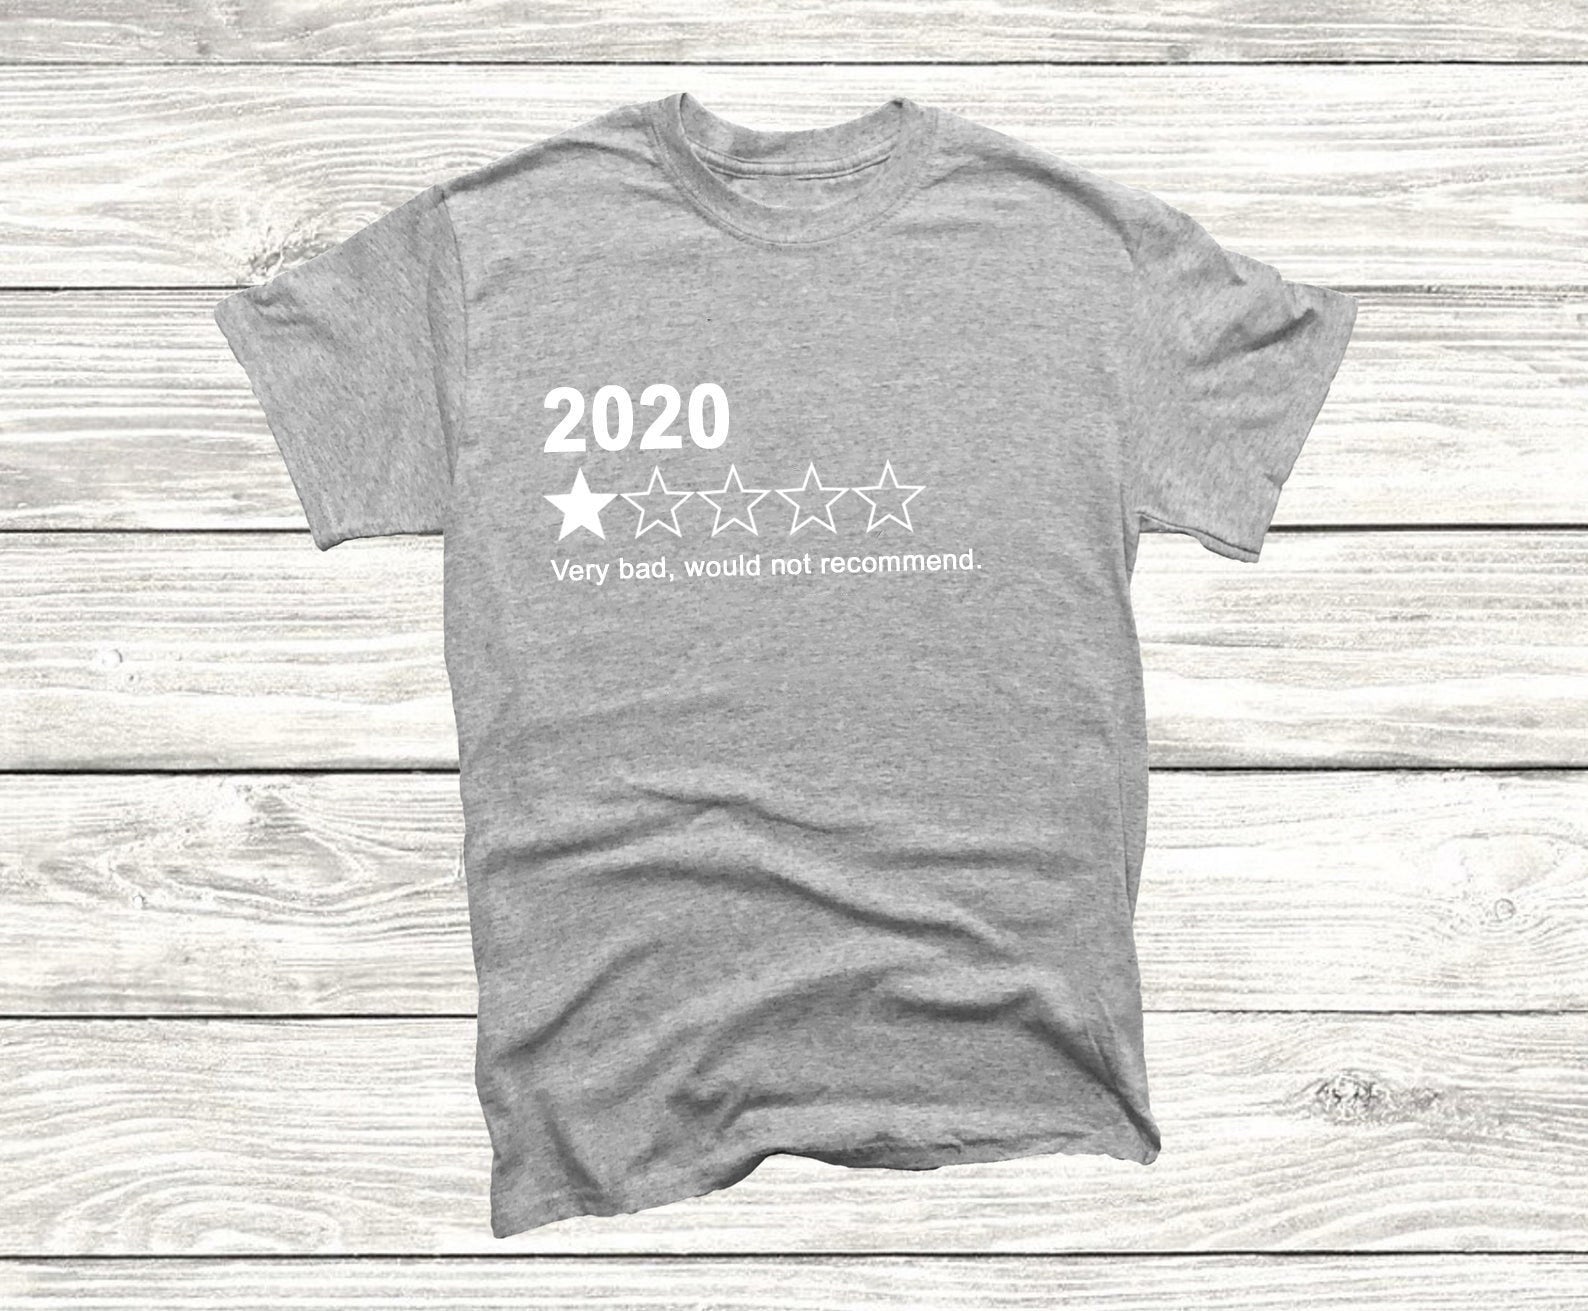 2020 would not recommend Funny shirt Quarantine shirt Inspirational shirt Funny tee Social distancing shirt Funny Tshirt Gift